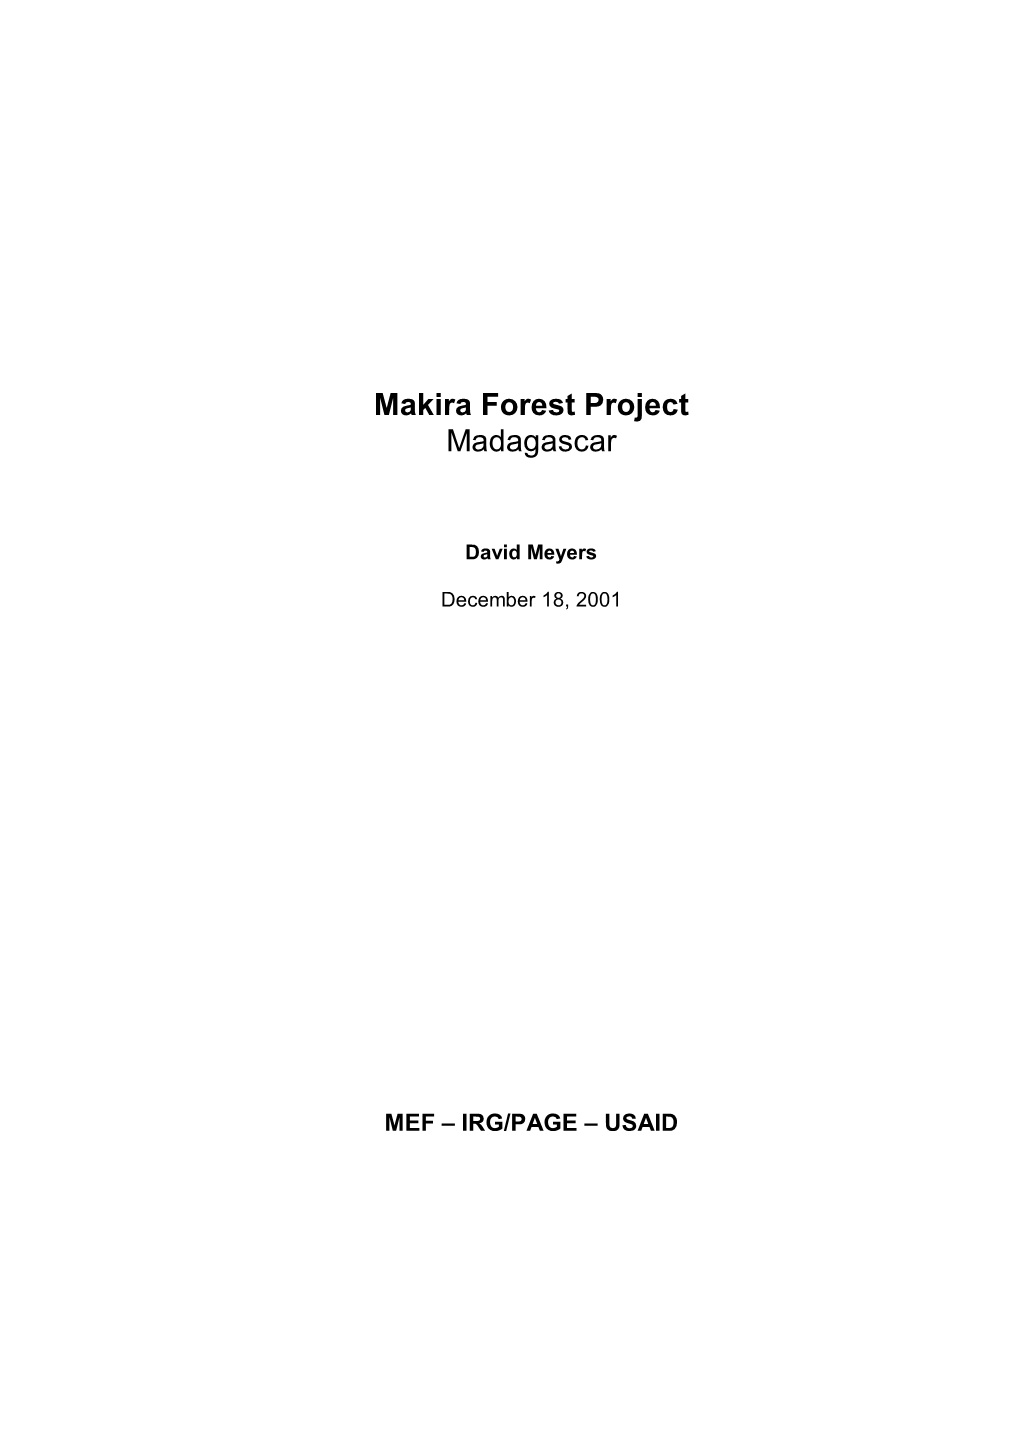 Makira Forest Project Madagascar